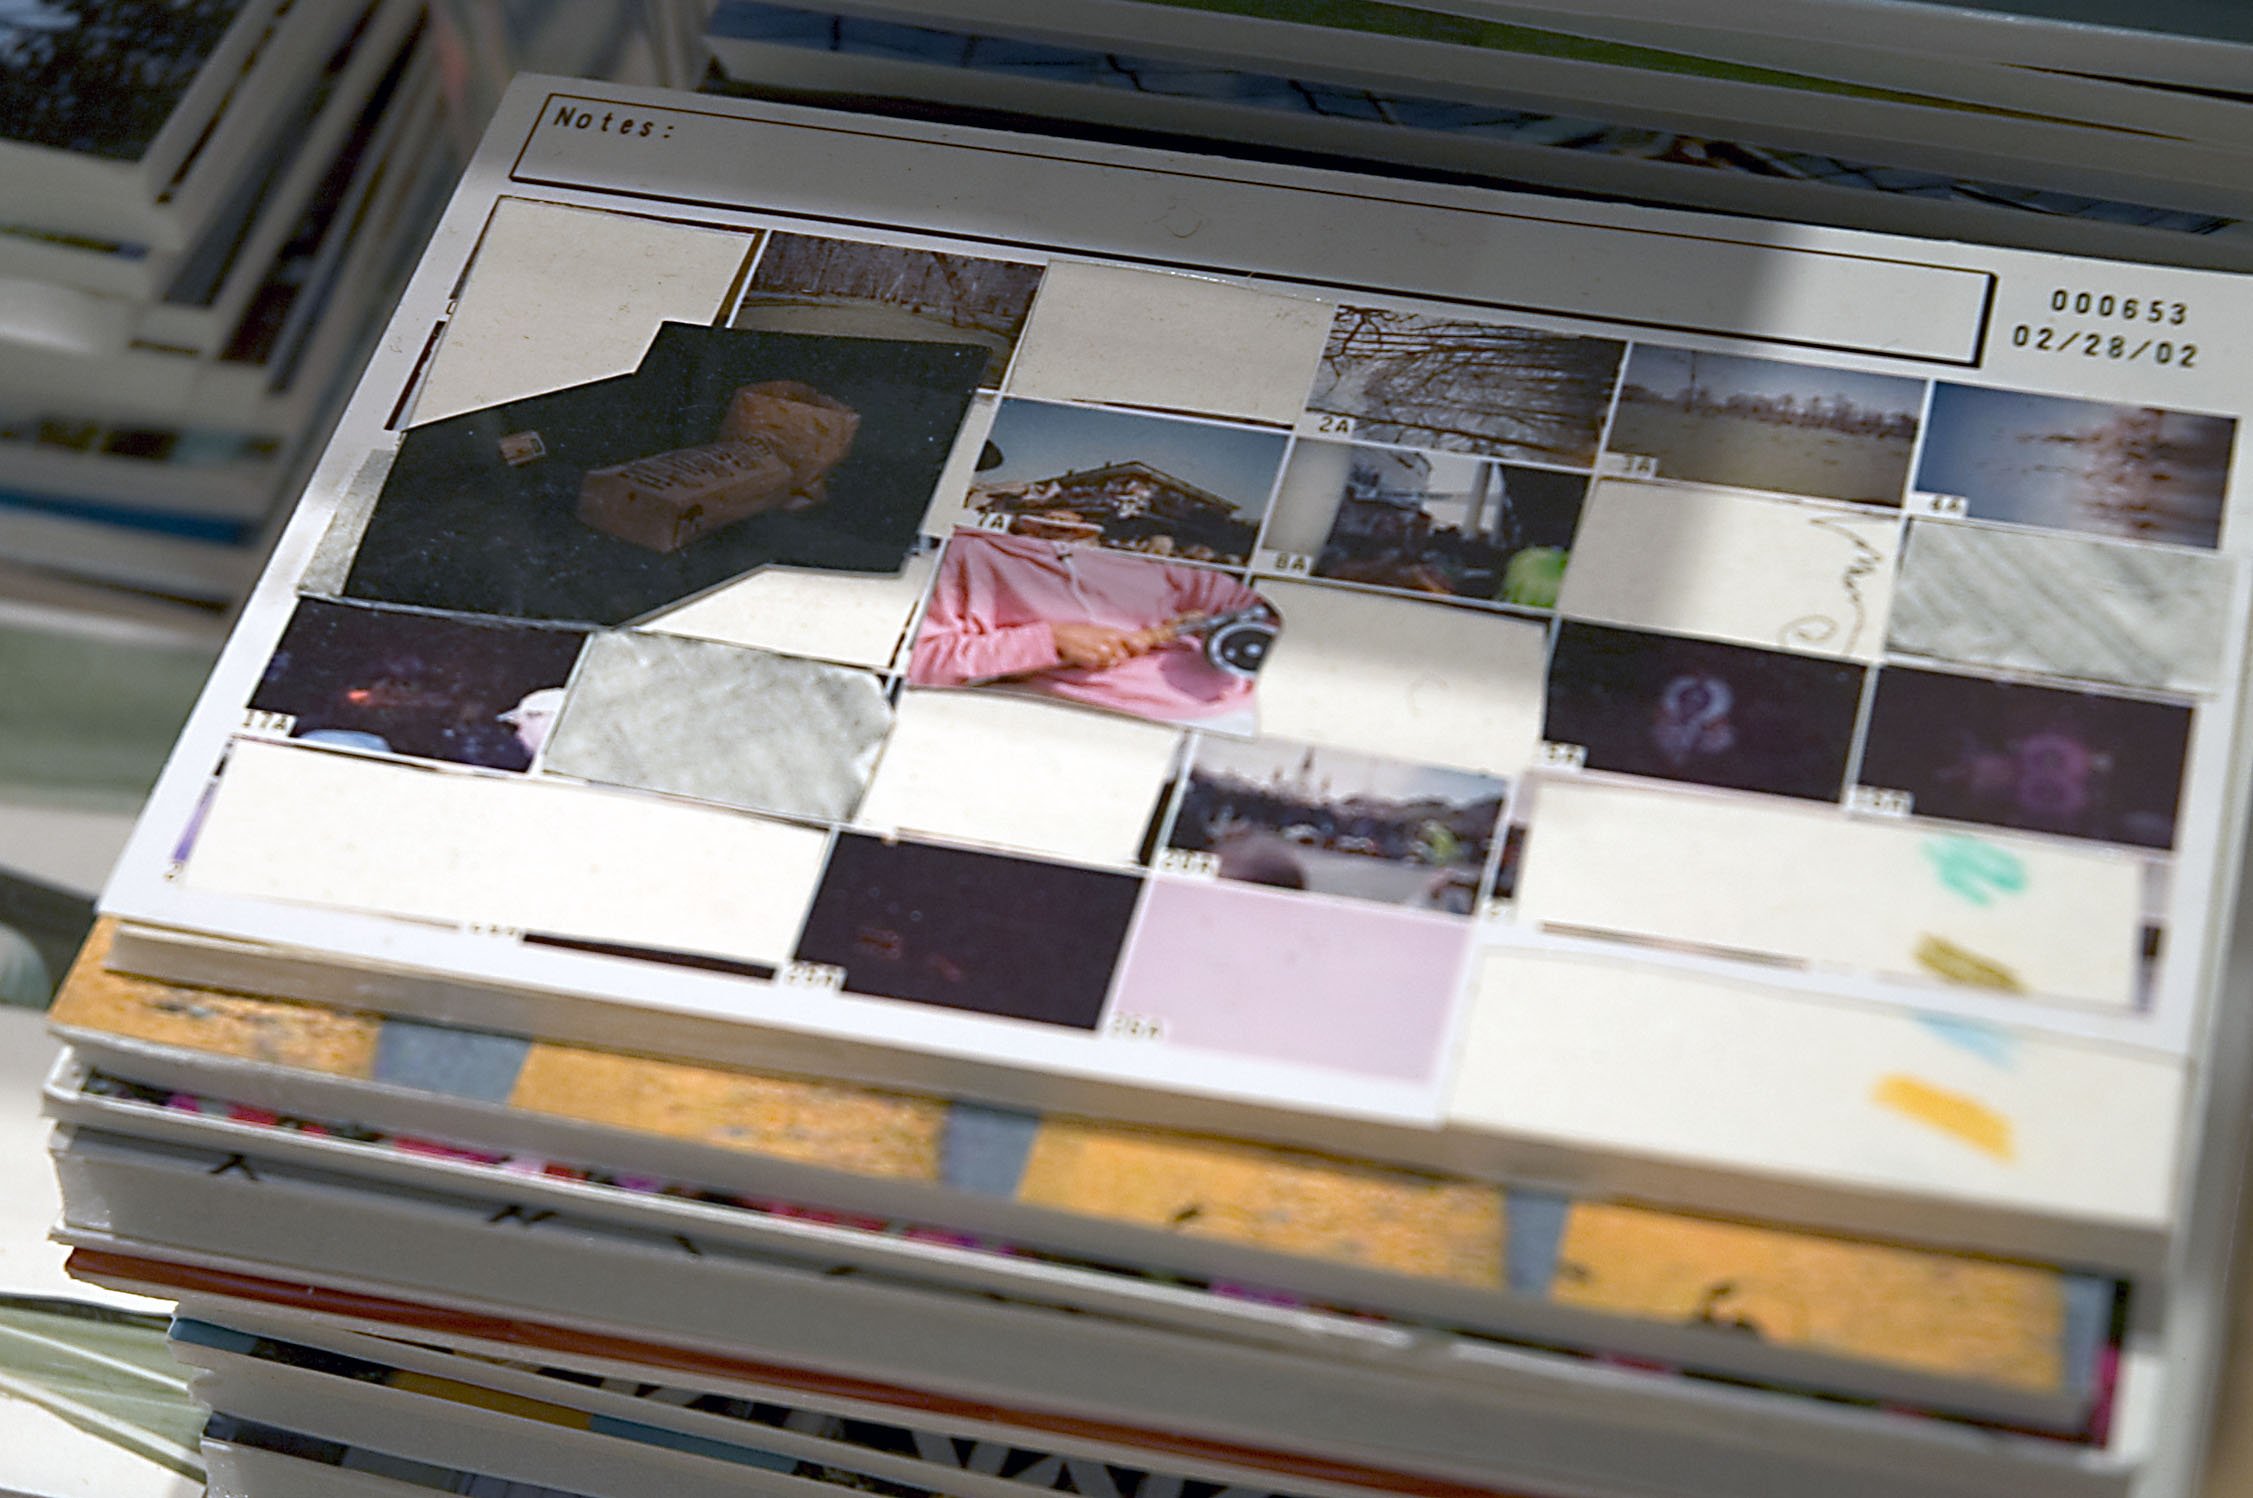   Fields 3-D , (detail), 2004, chromogenic prints, pencil on paper, glue, paper, foam core, Plexiglas, 5.25 x 7 x 6 inches 